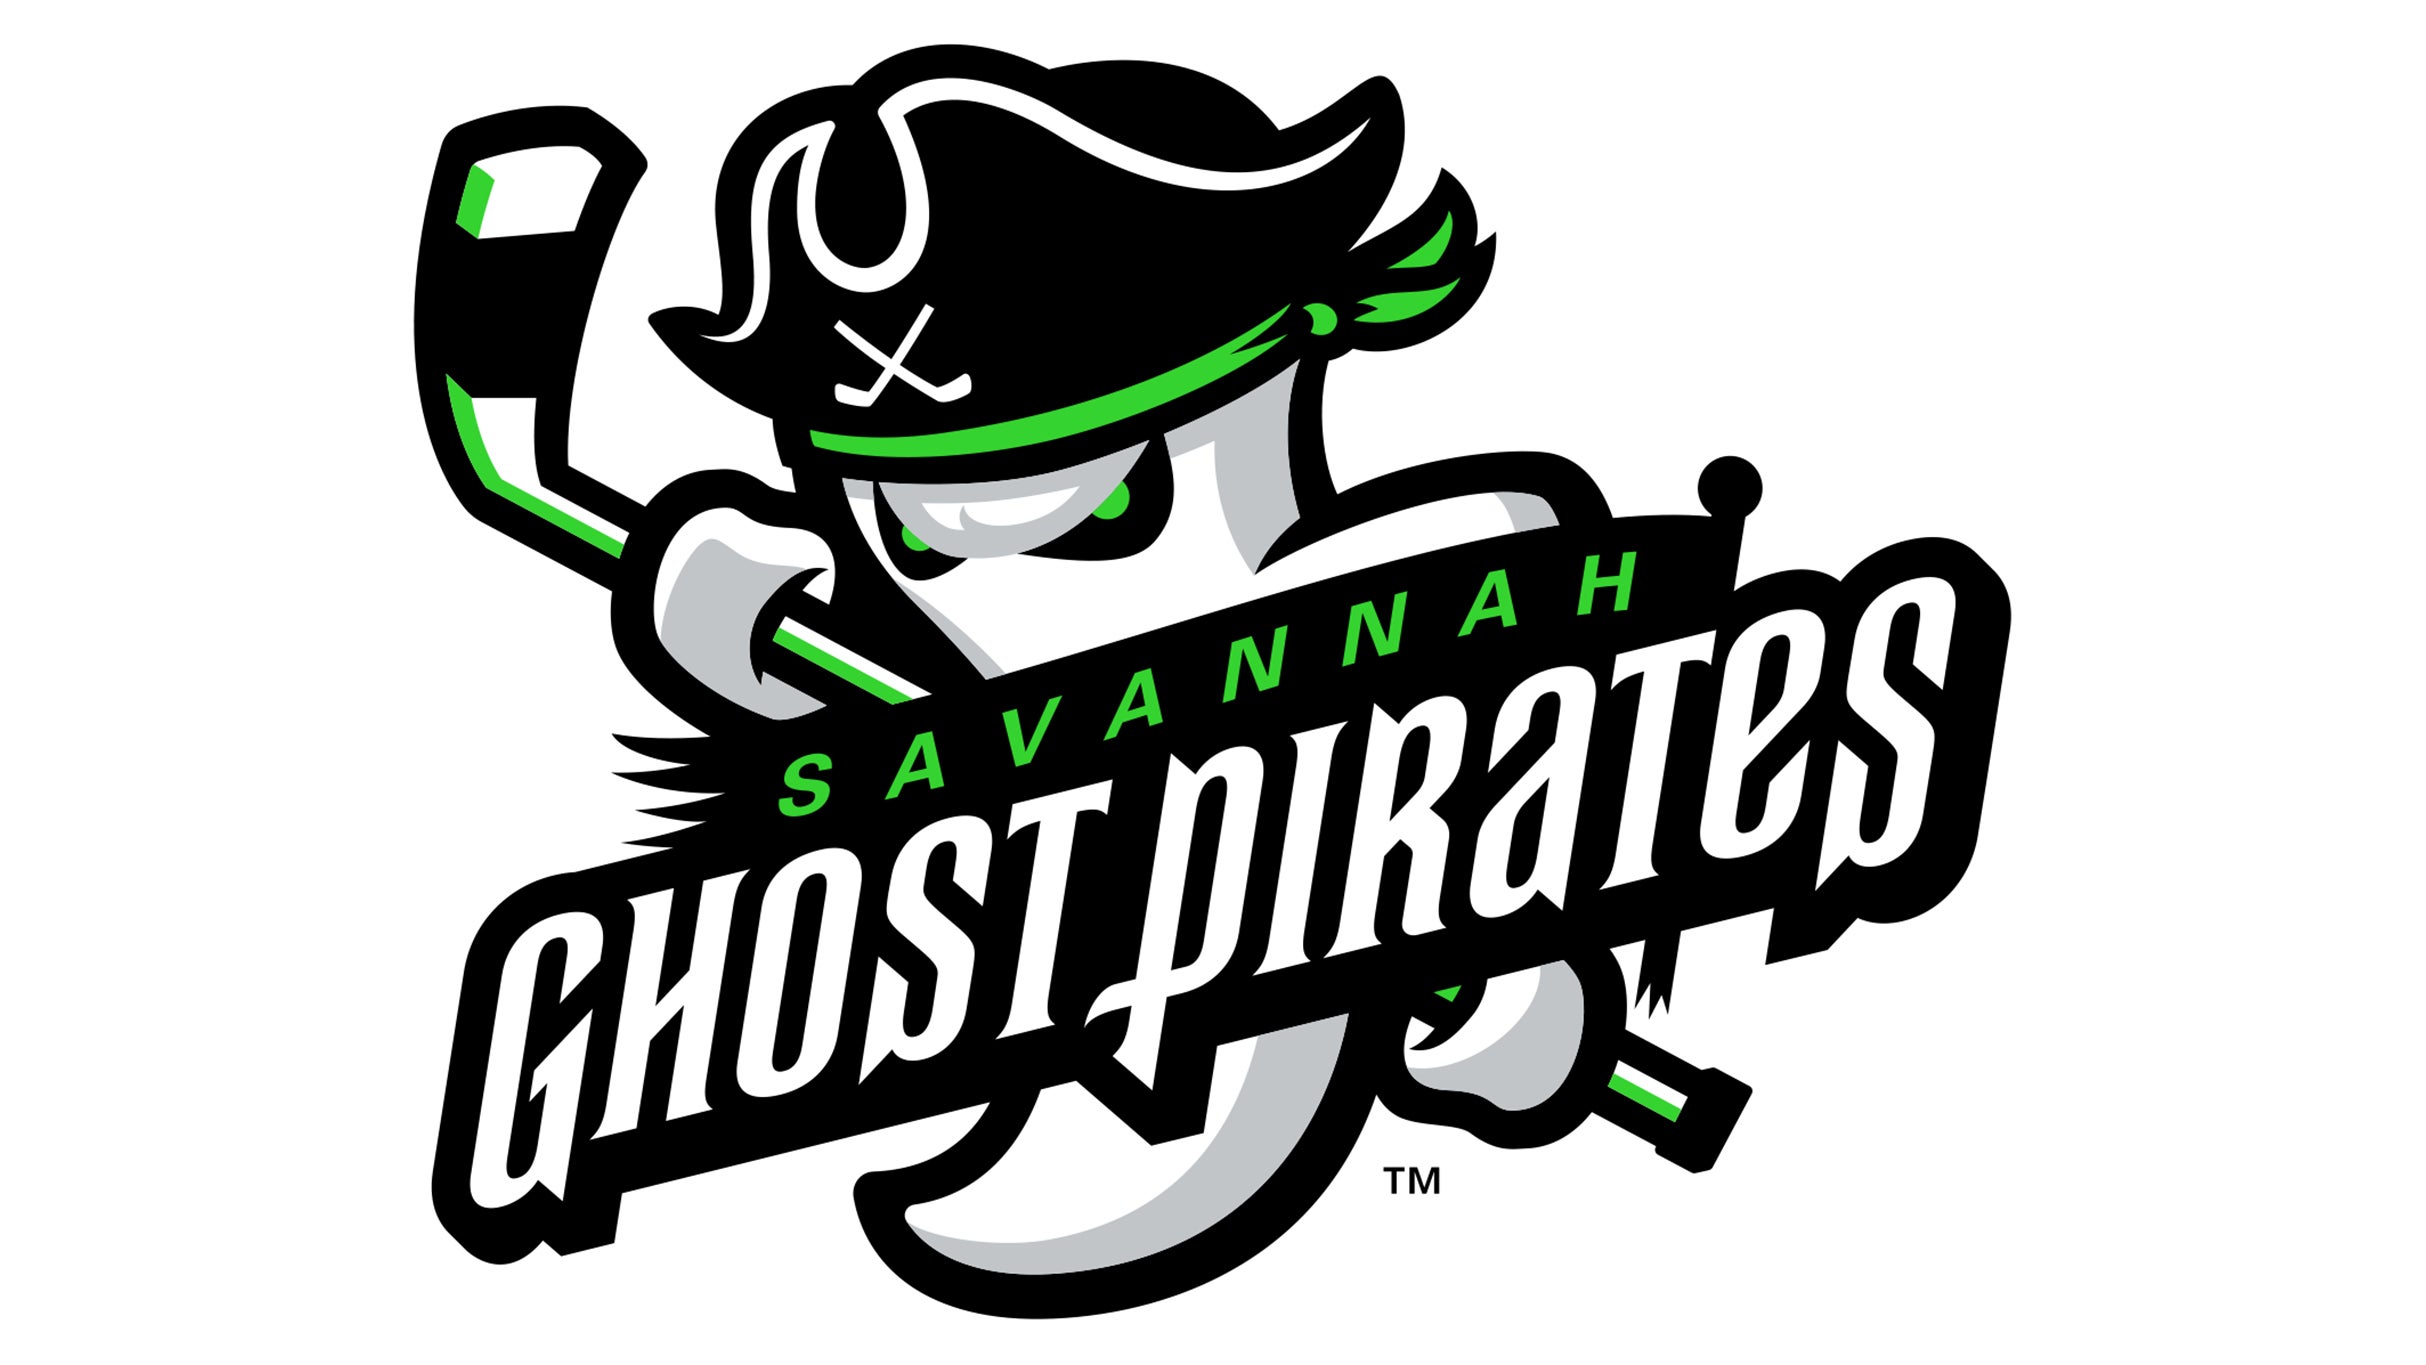 Buy Savannah Ghost Pirates Tickets